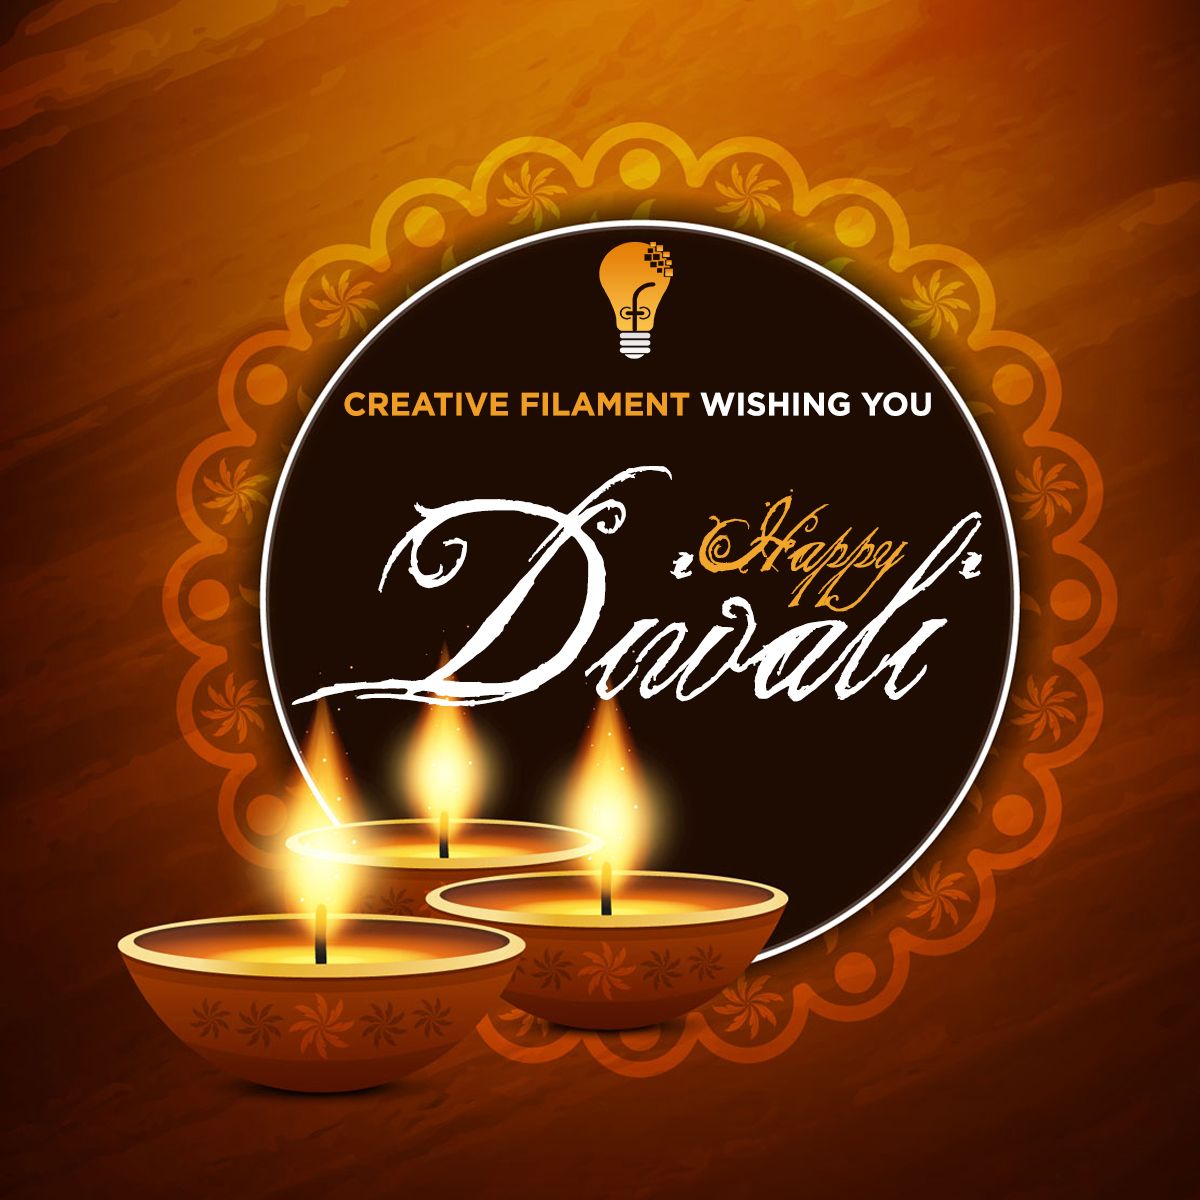 Creative Filament Wishing you Happy Diwali 2017.jpg